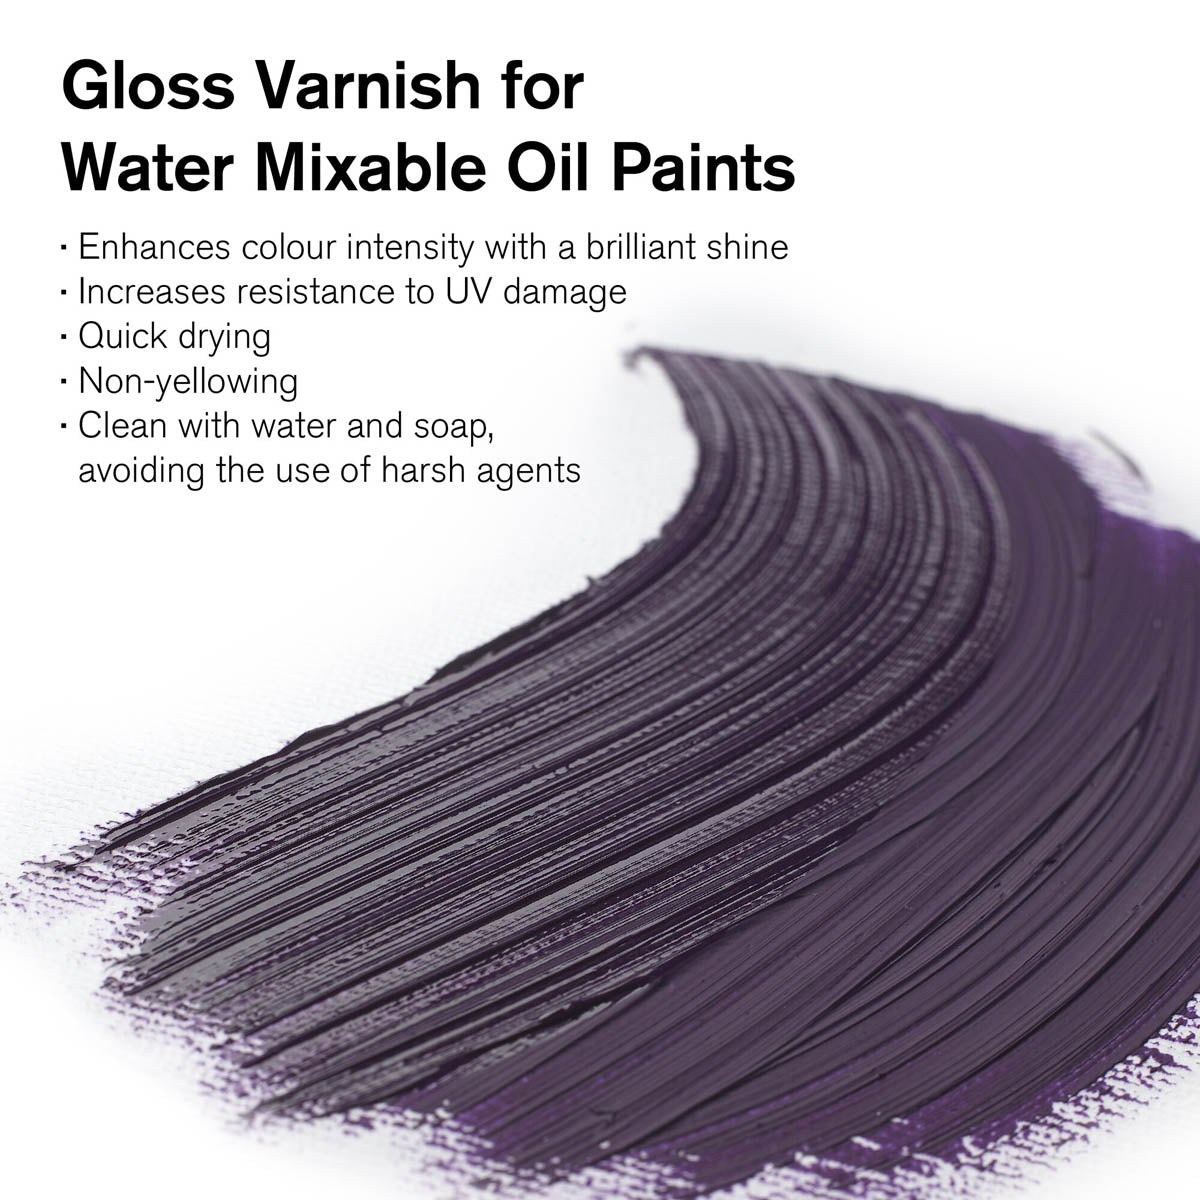 Winsor and Newton - Water Mixable Gloss Varnish - 250ml